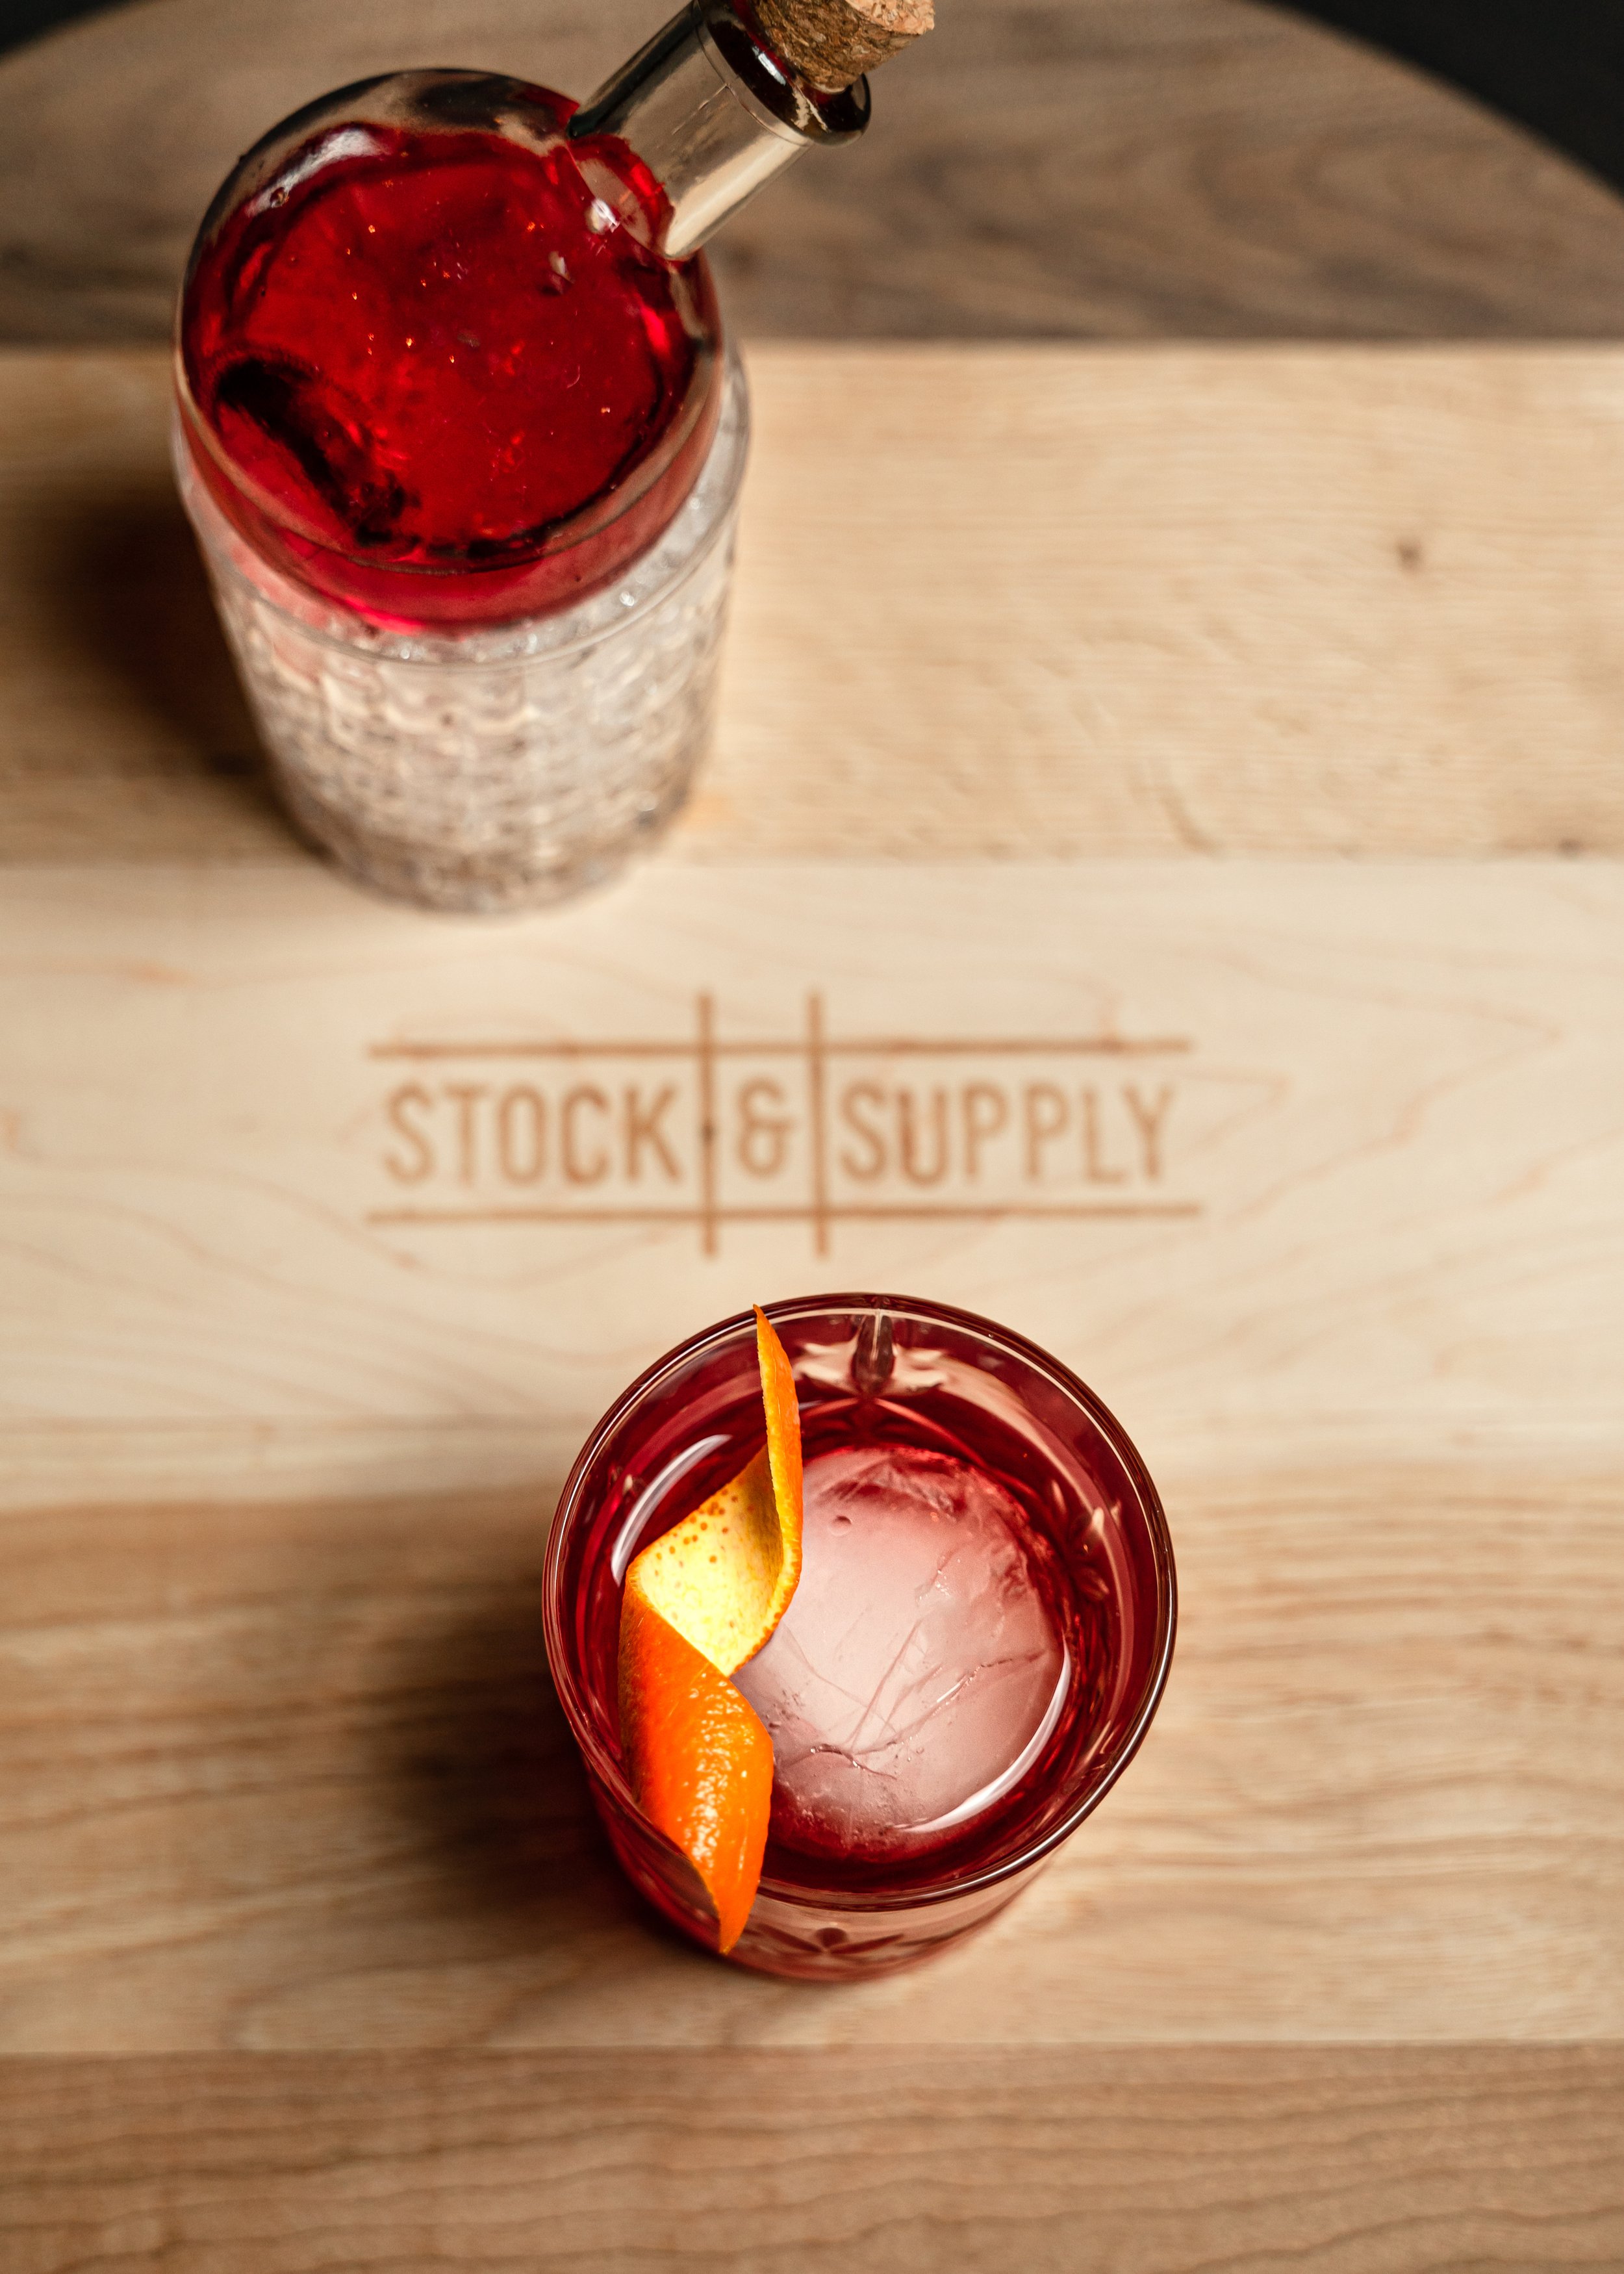 OliviaHarrison_Stock&Supply_Drinks.jpg